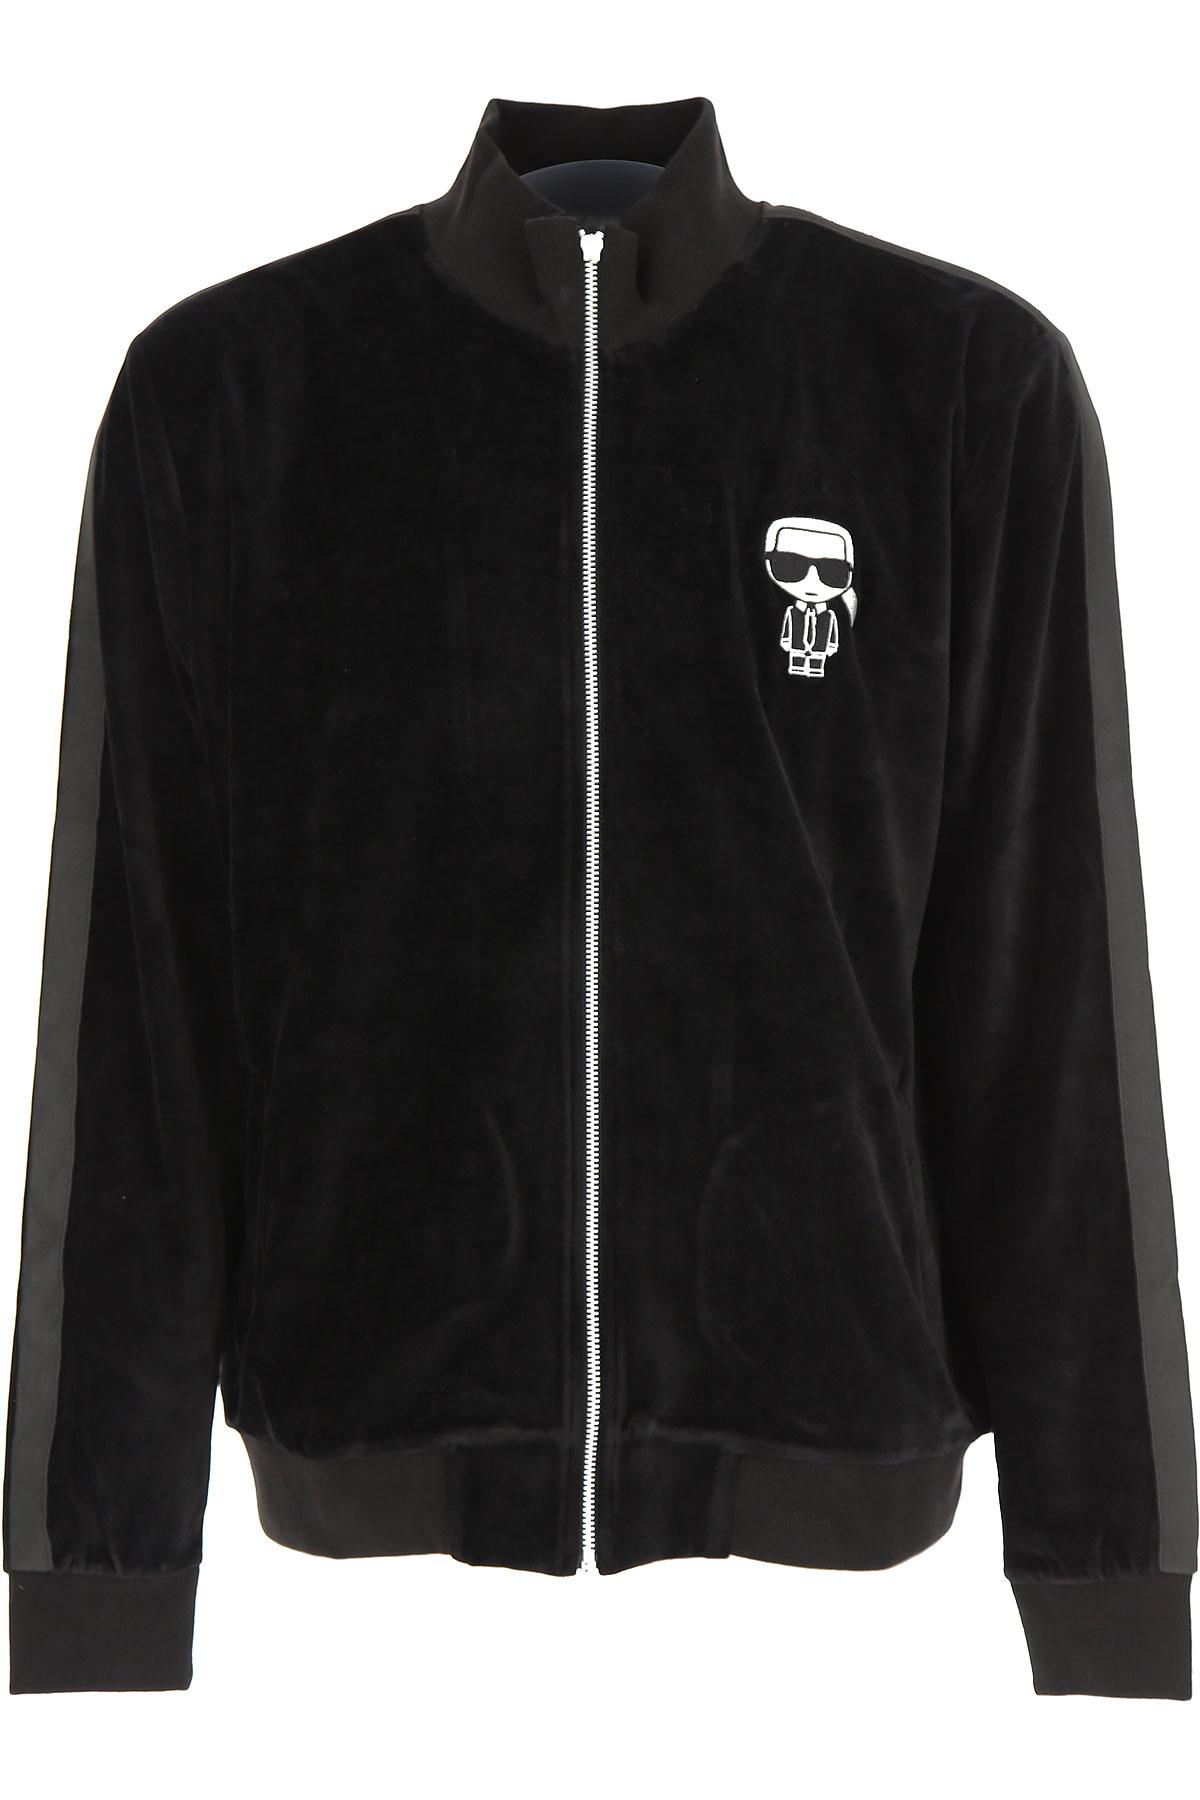 Lyst - Karl Lagerfeld Sweatshirt For Men On Sale in Black for Men